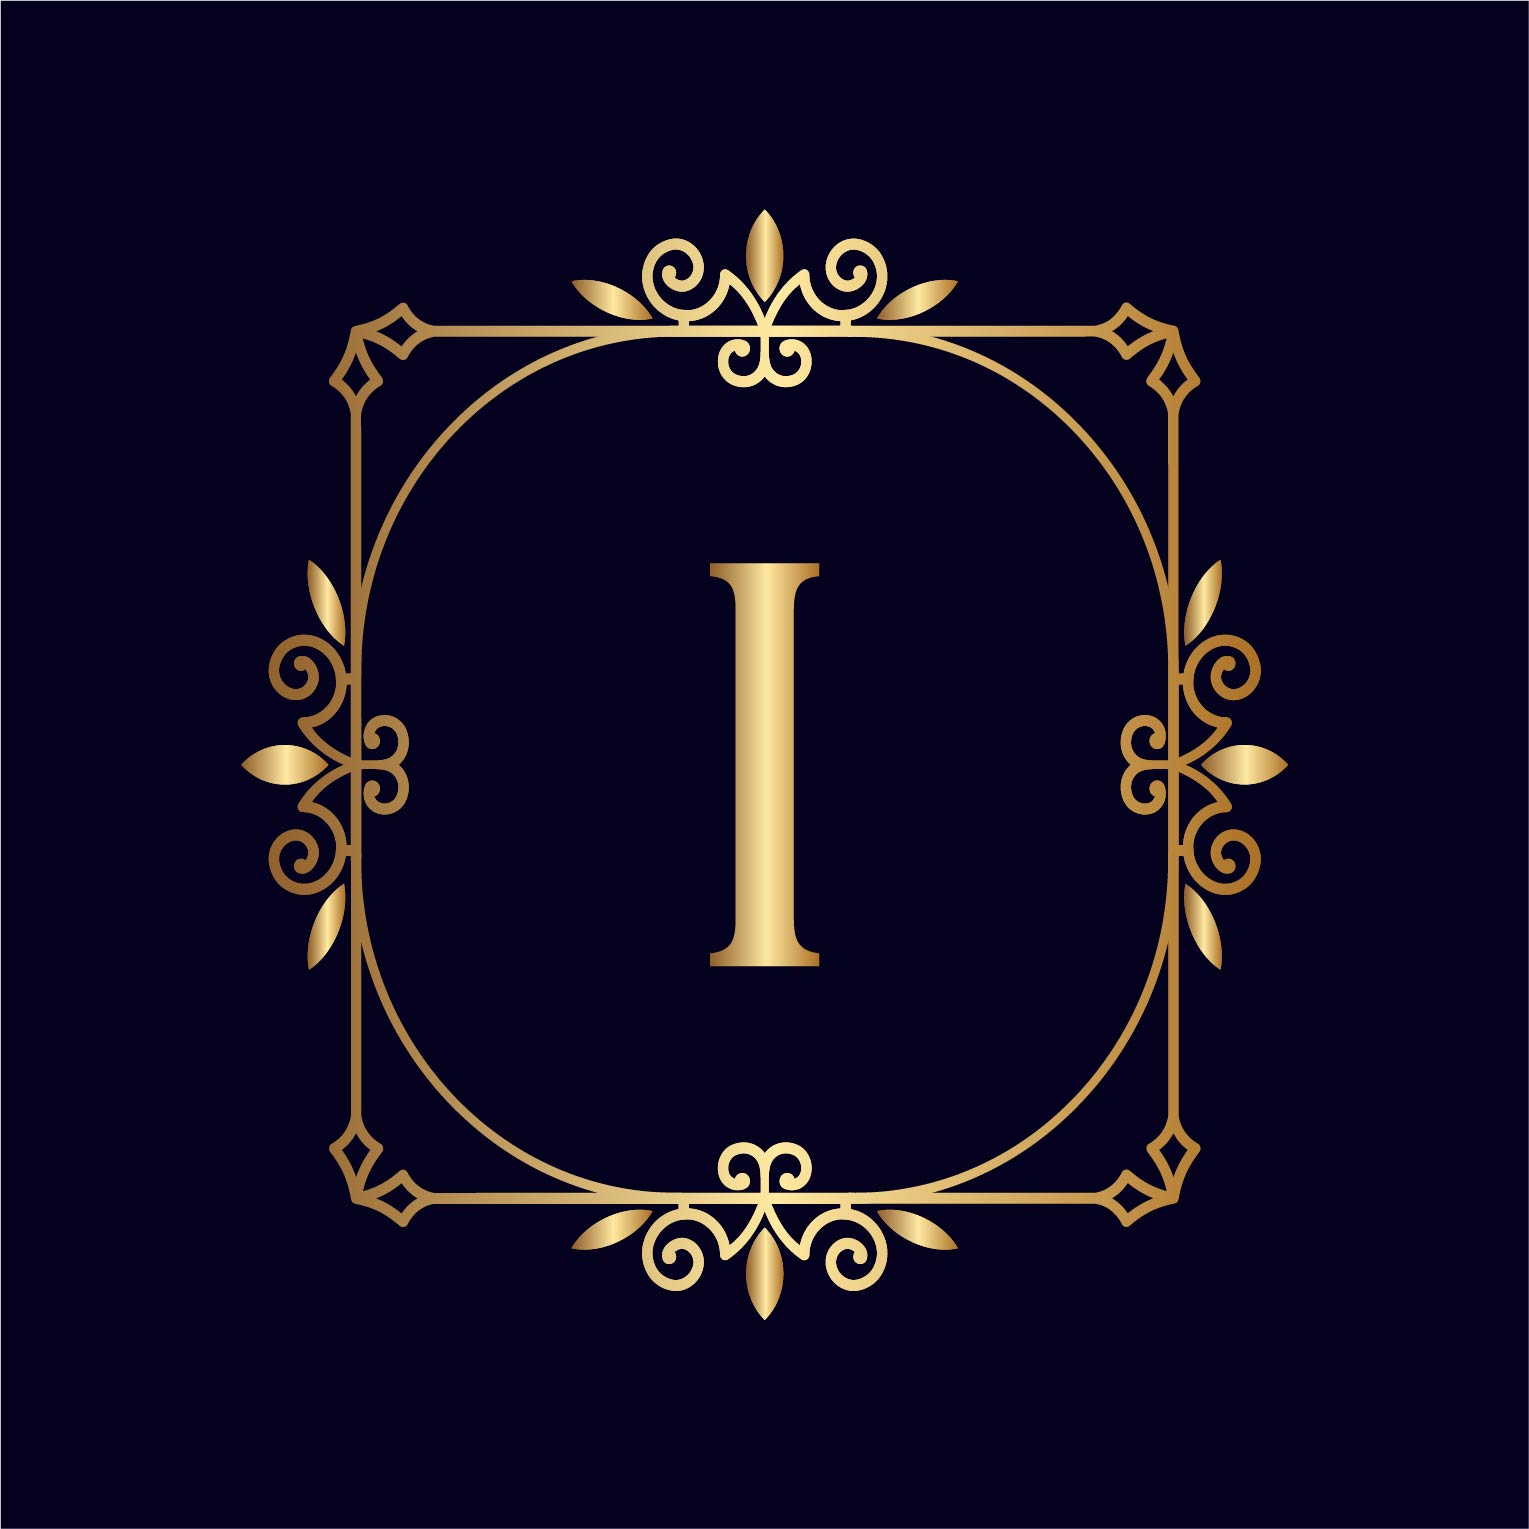 Artistic Gold Letter I Logos Design preview image.